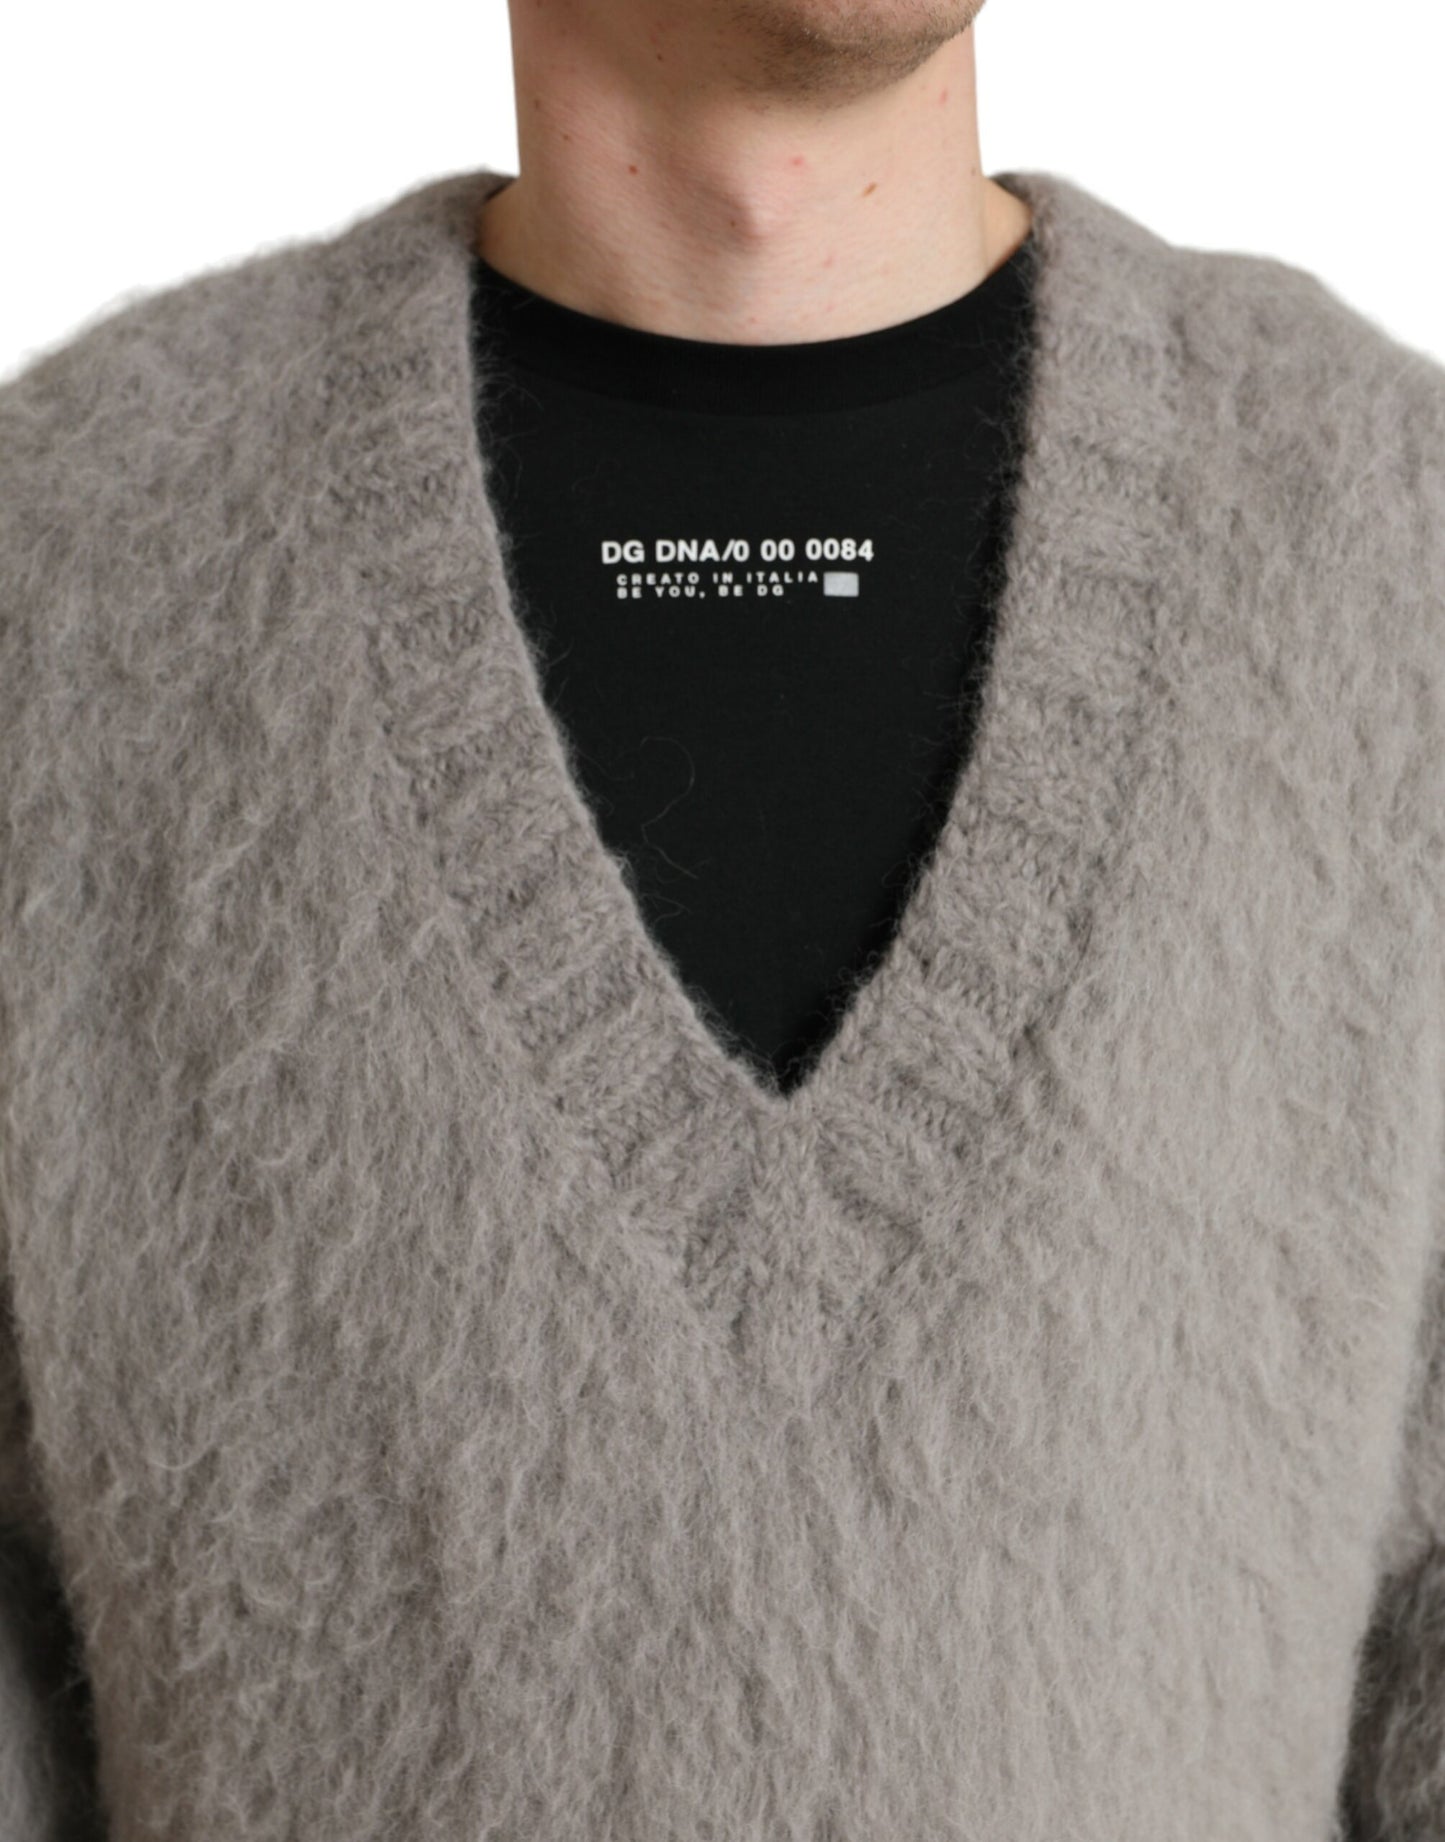 Elegant Grey V-Neck Alpaca Blend Sweater